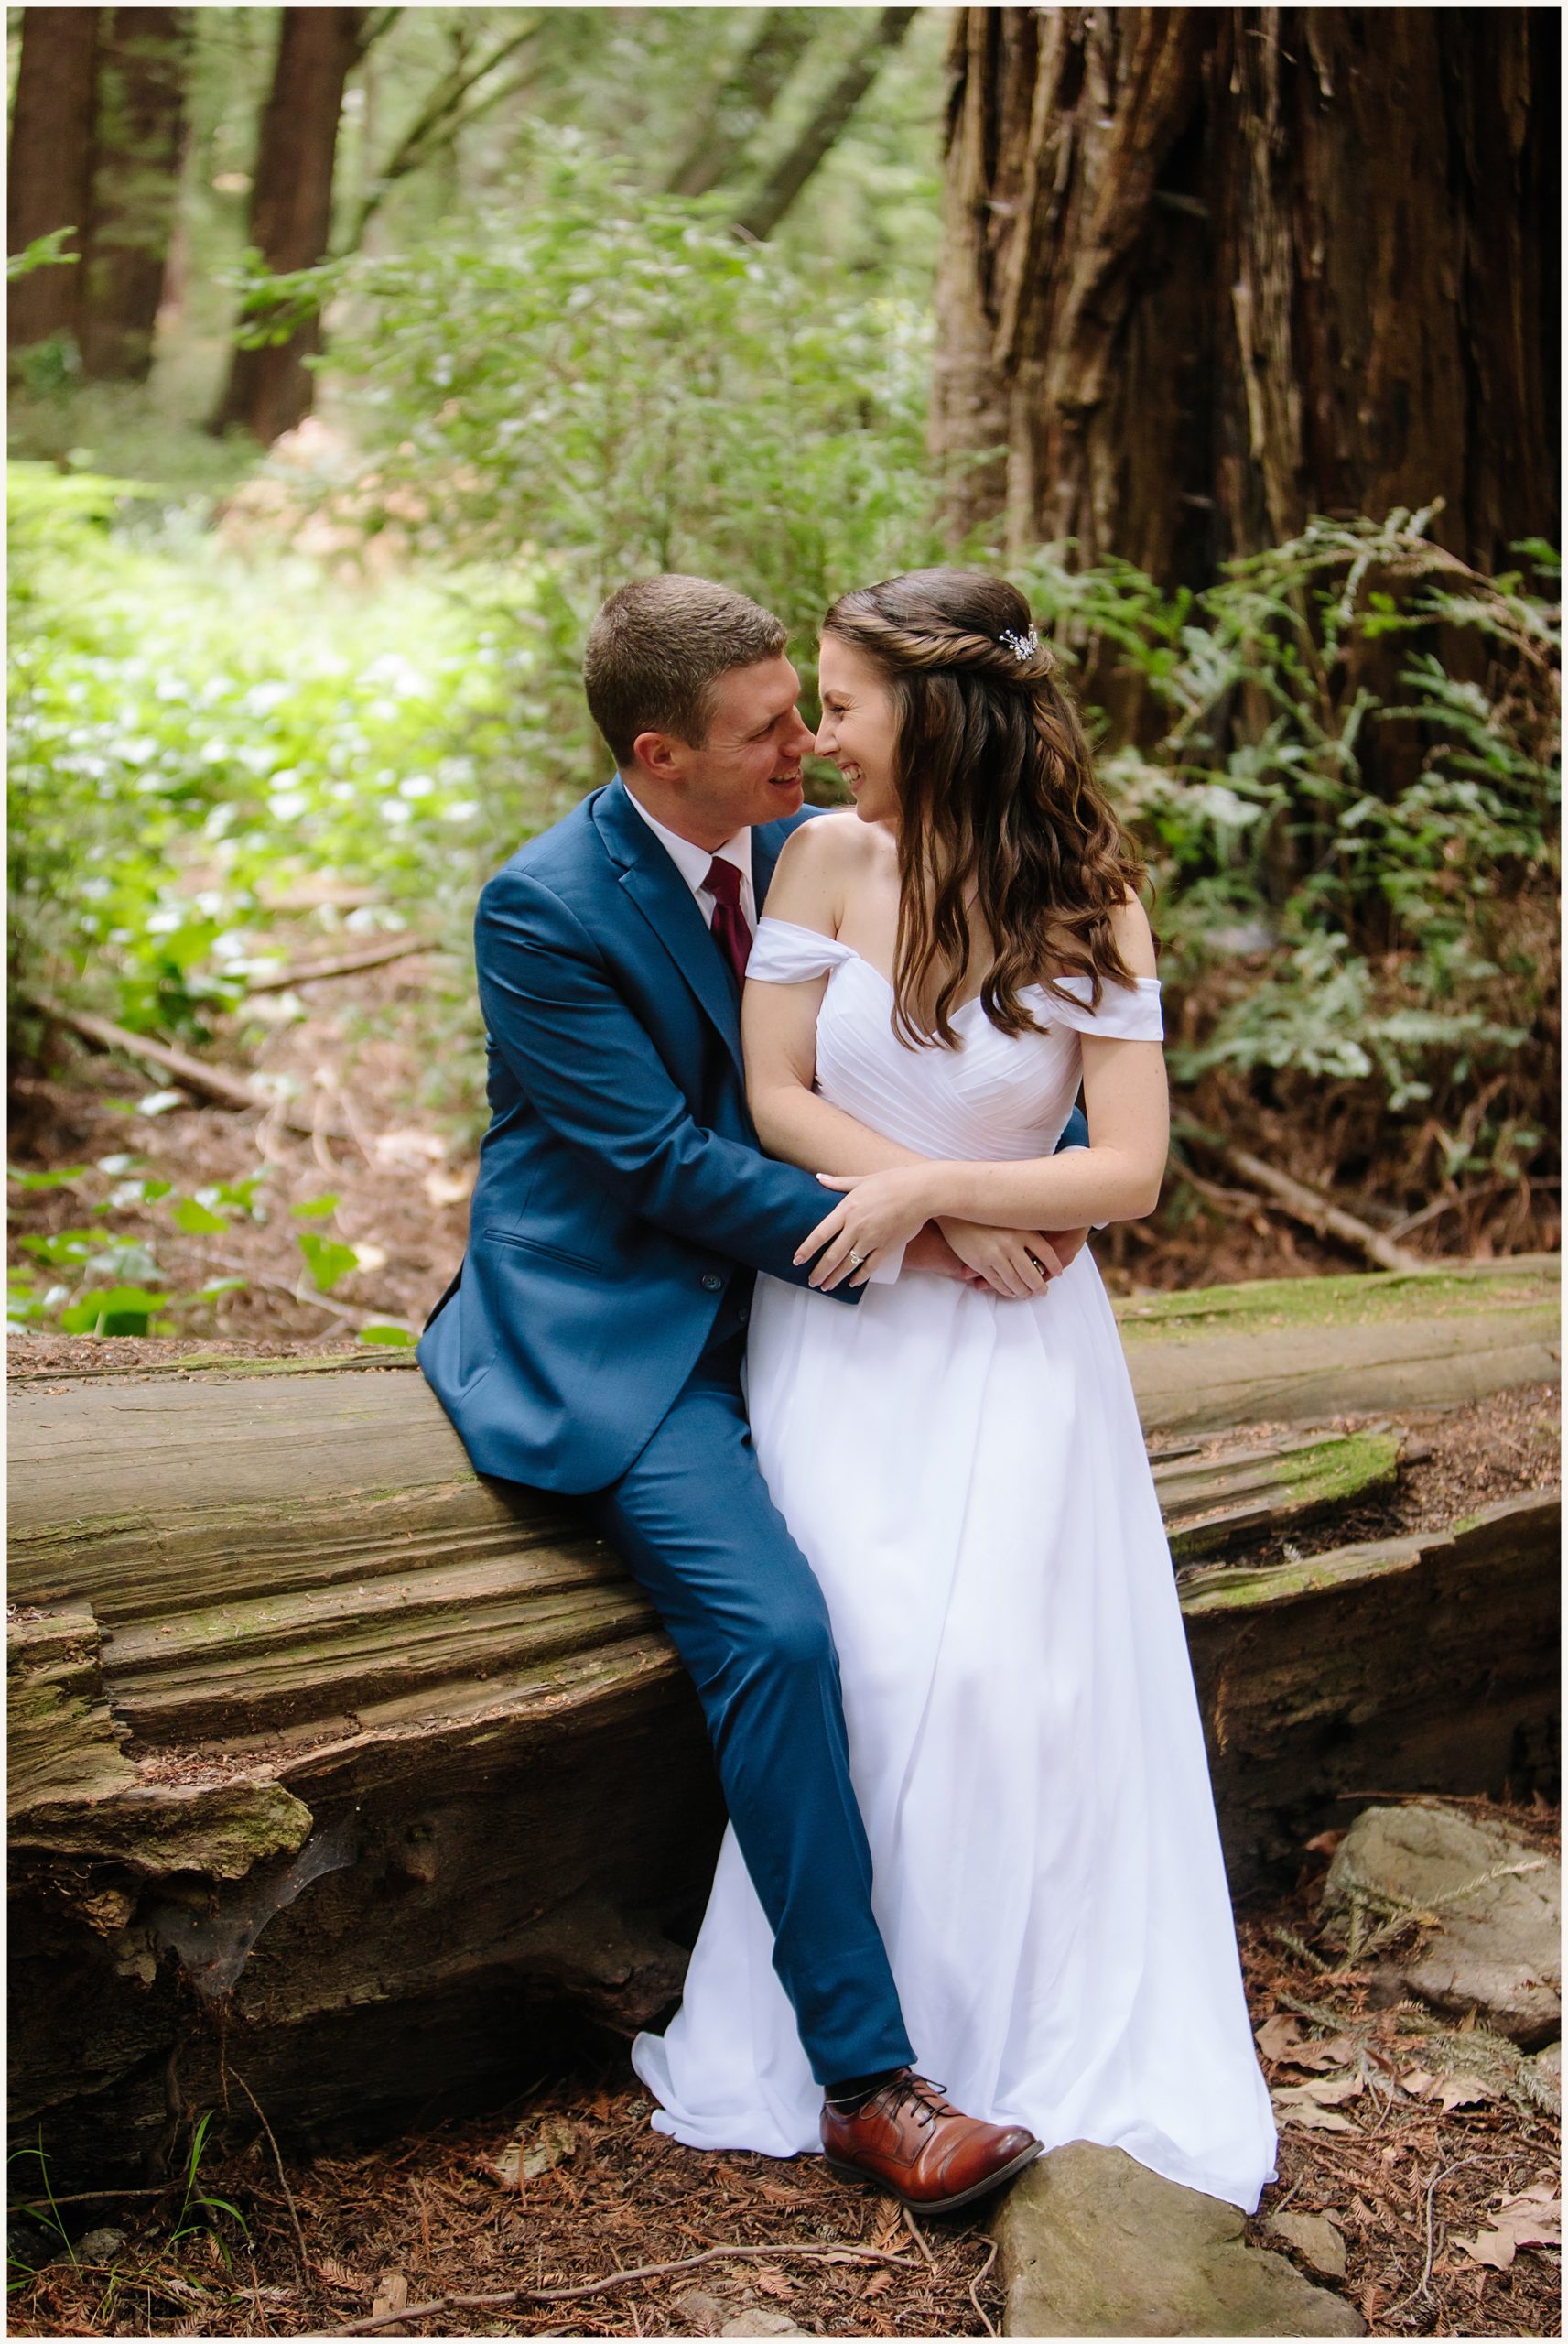 Bride and Groom photos around Beautiful Redwood Trees